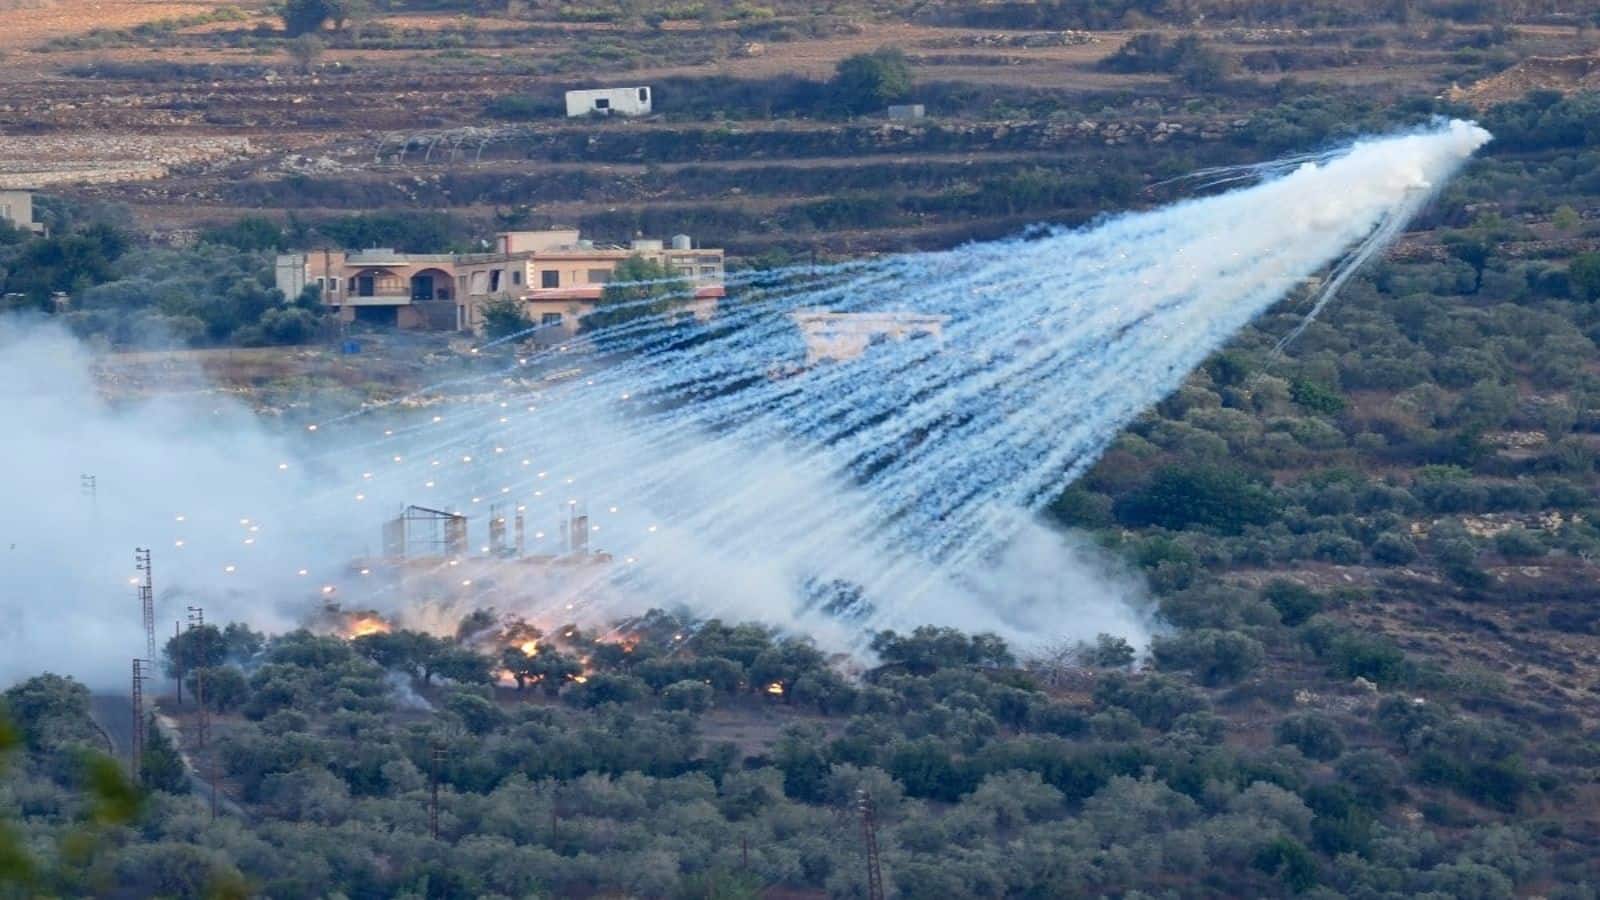 Rights organization accuses Israel of using white phosphorus in Lebanon